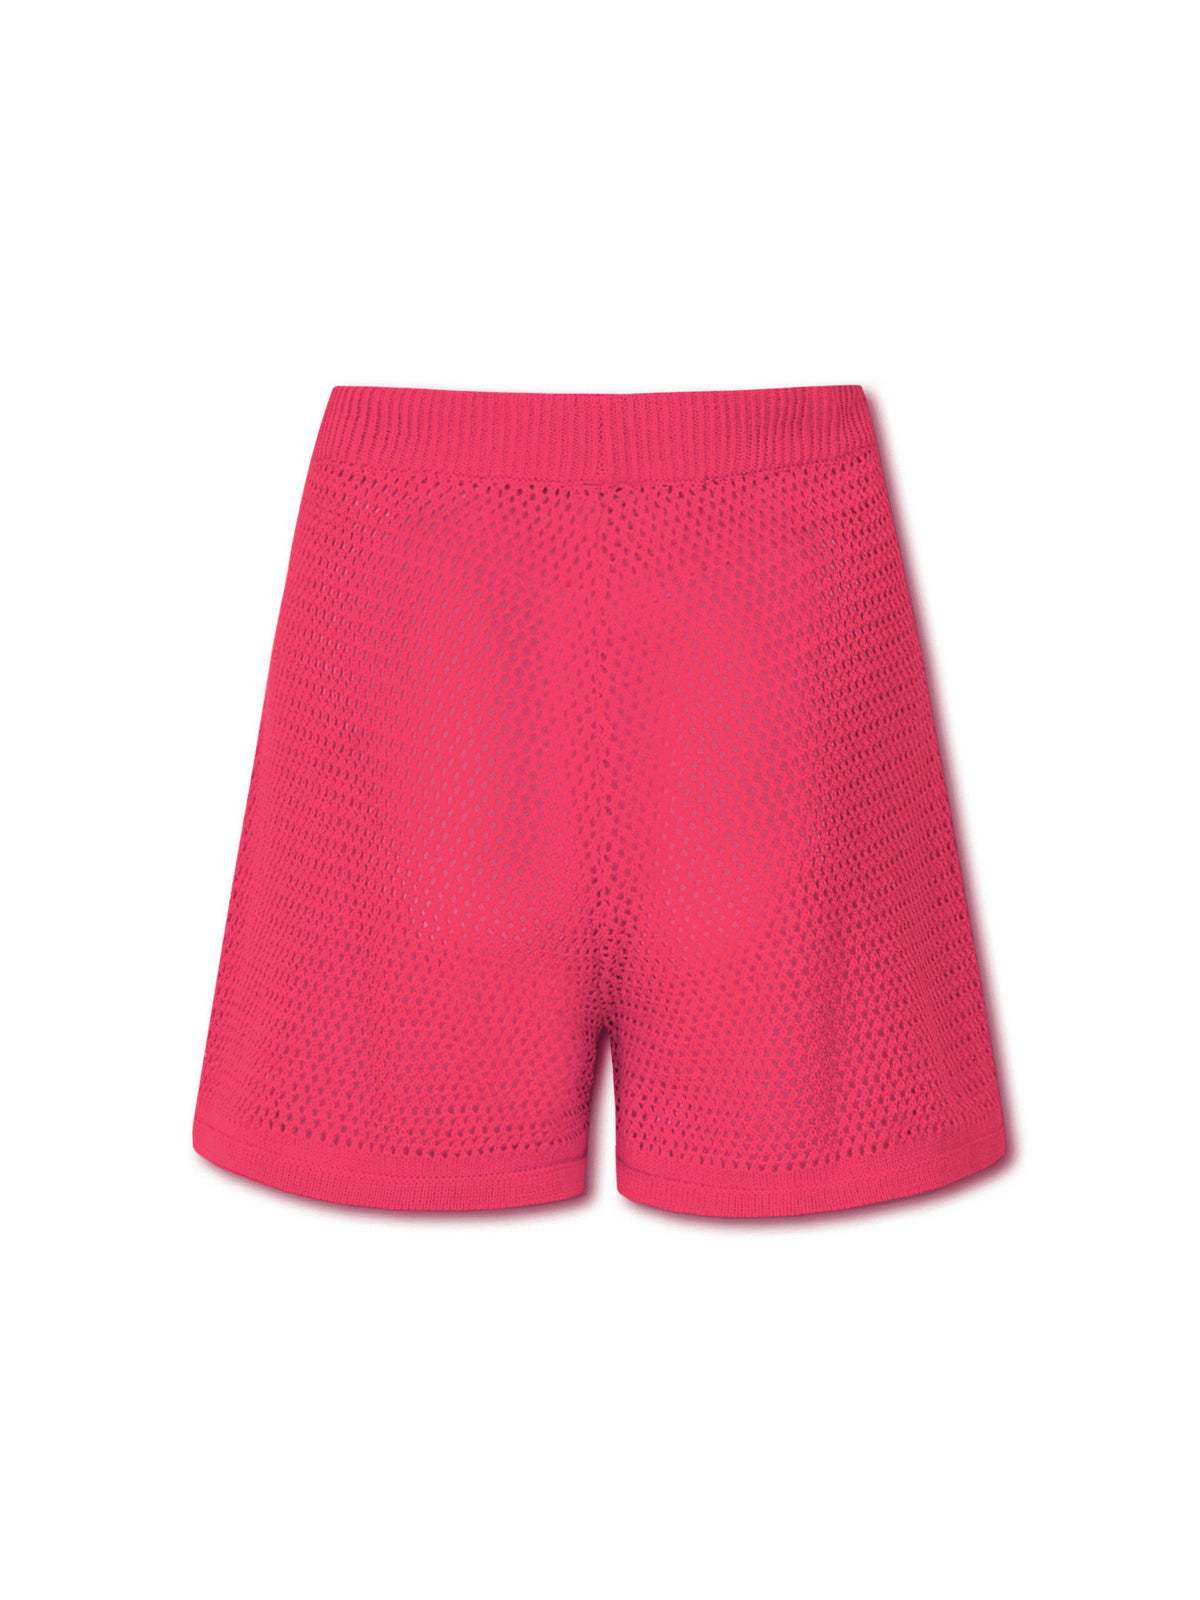 FINCH knit shorts - bold berry